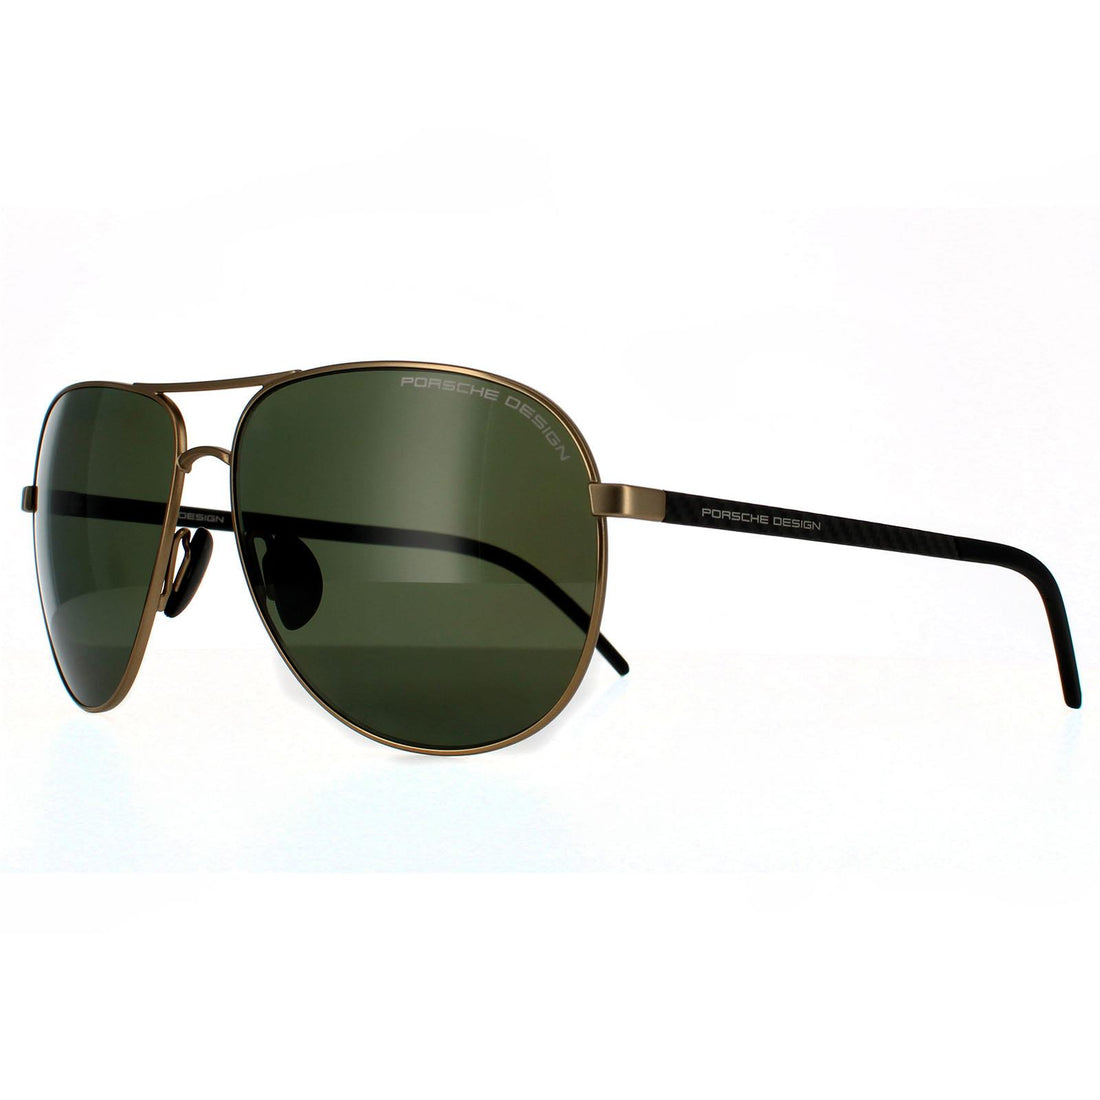 Porsche Design Sunglasses P8651 B Gold Green Grey Polarized